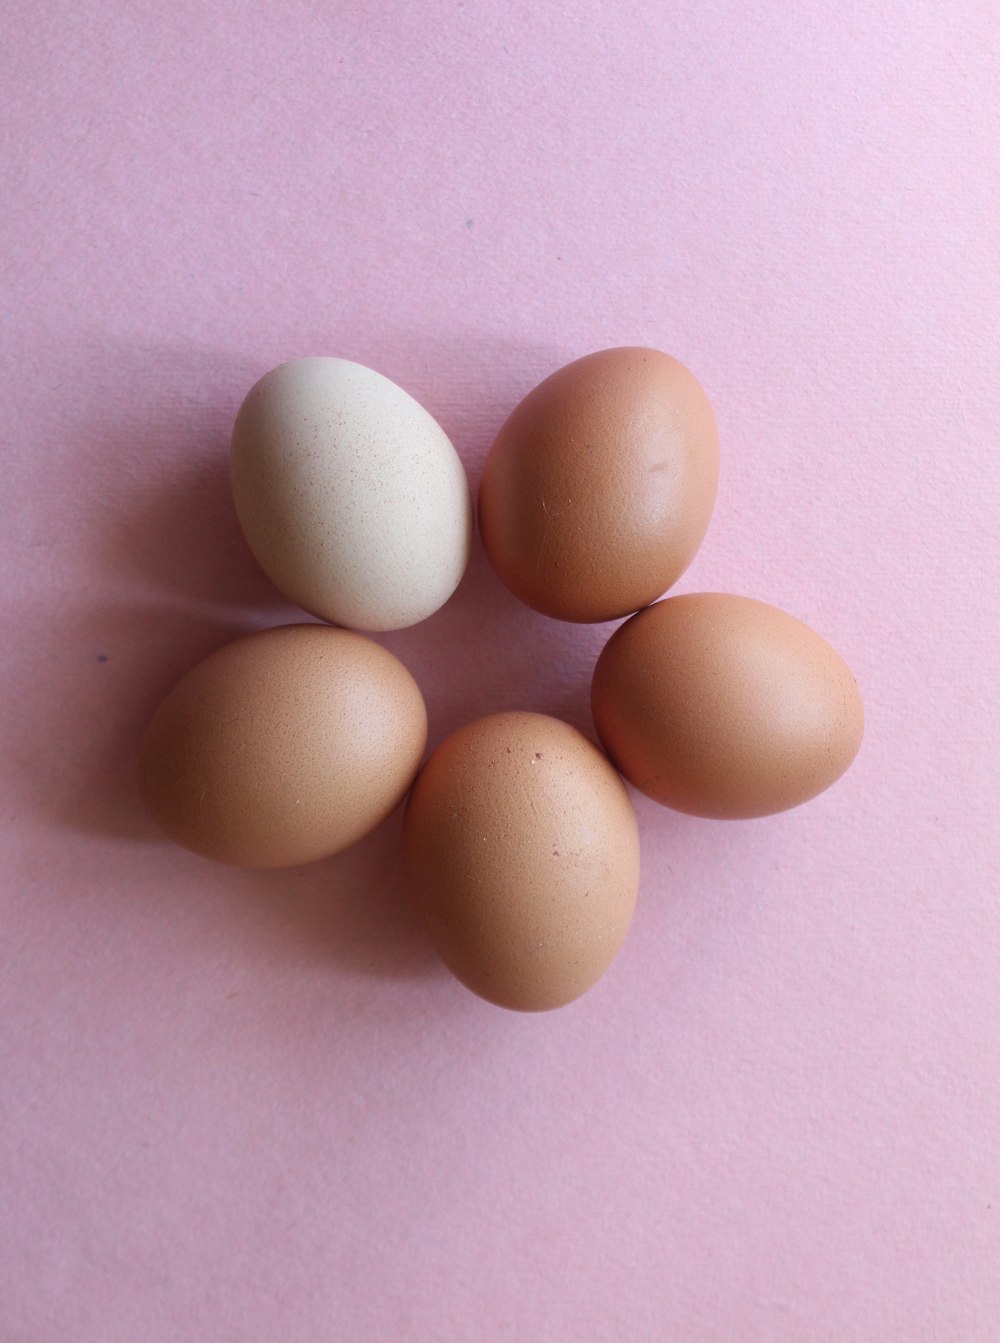 2 huevos marrones sobre tela rosa